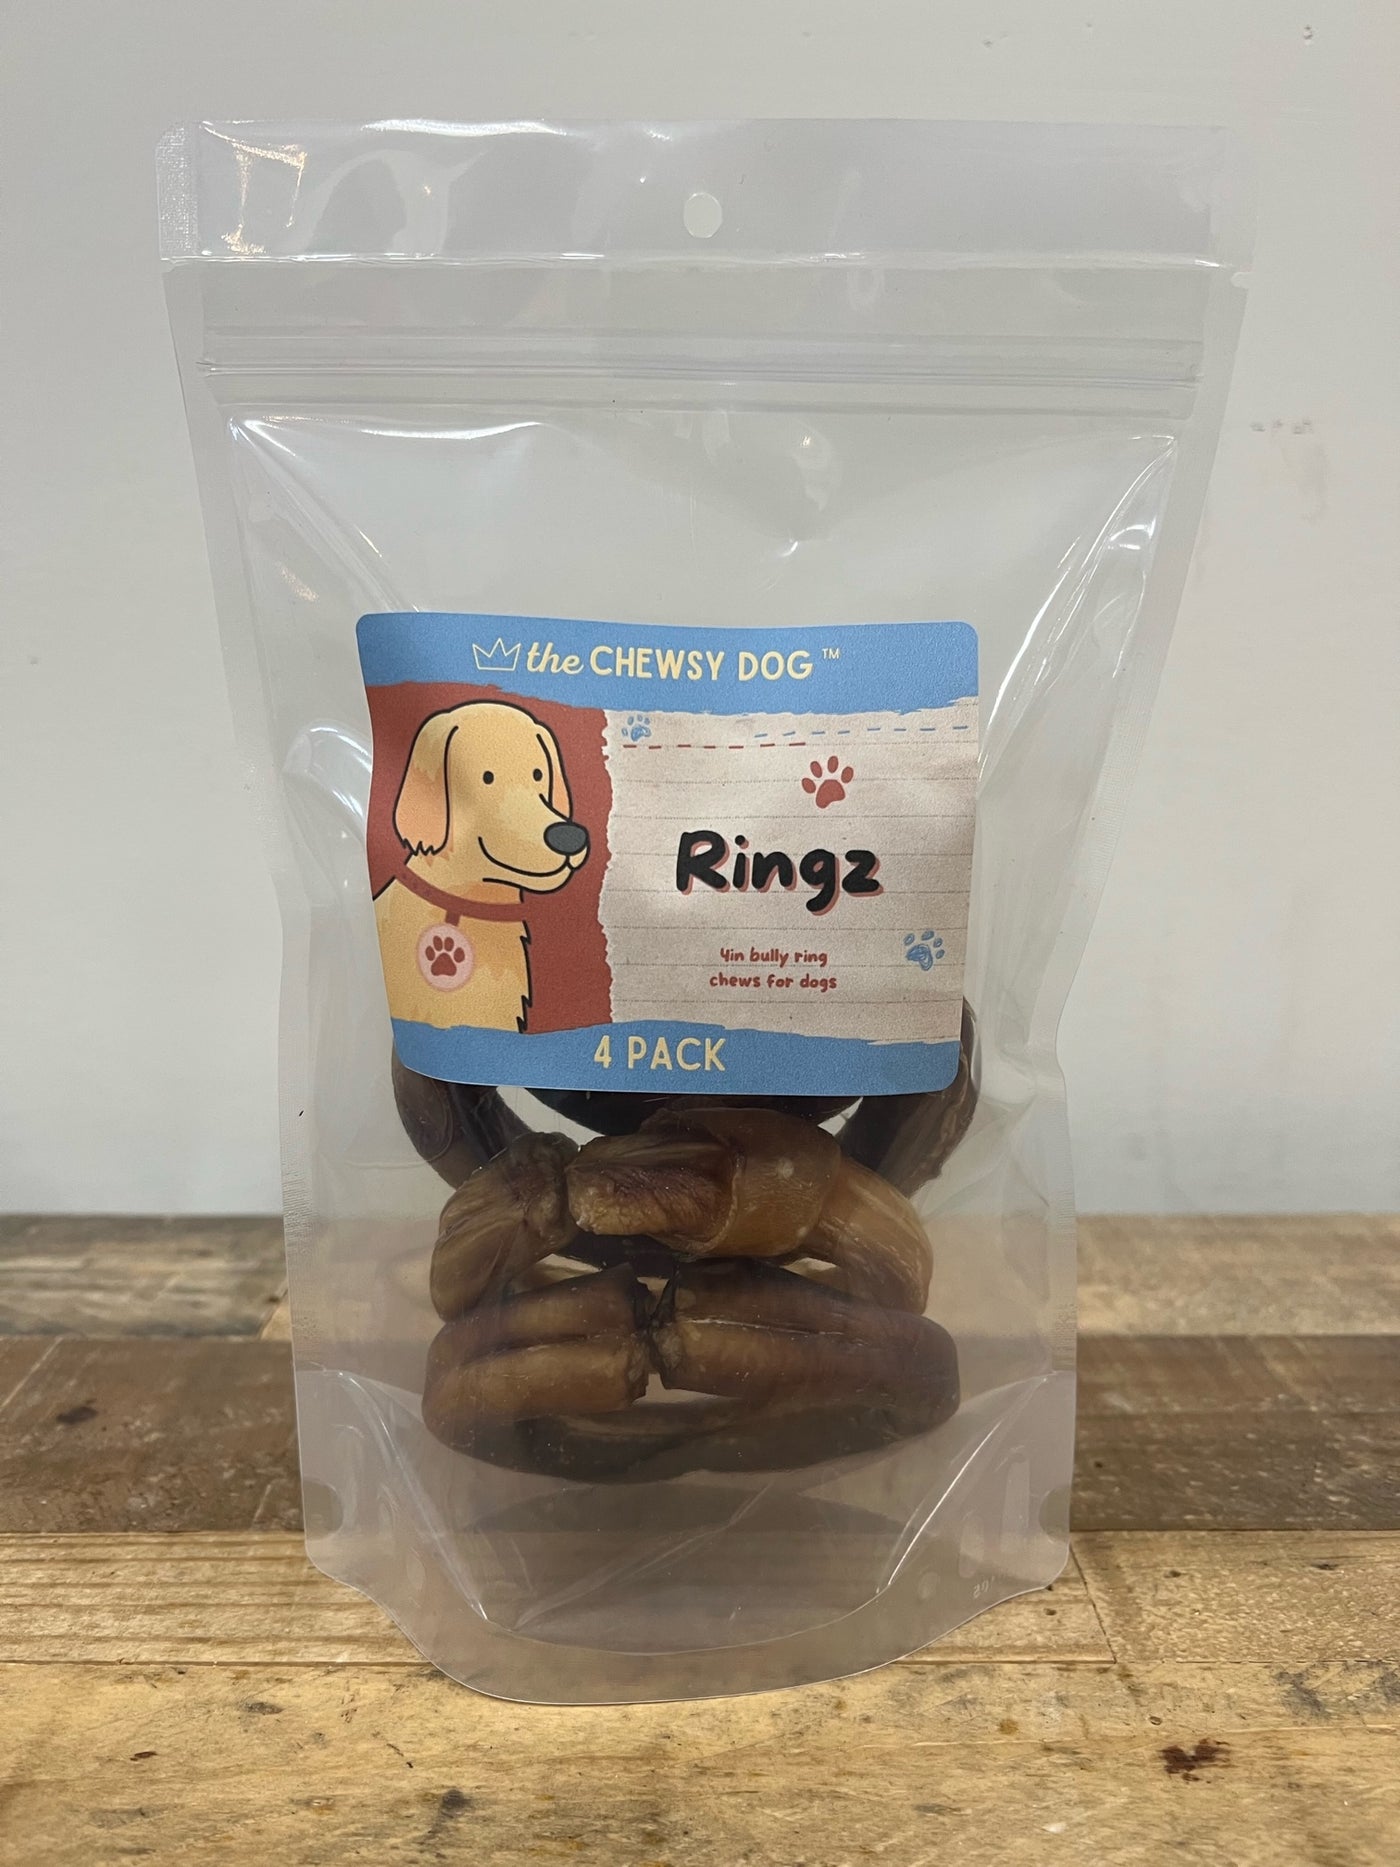 The Chewsy Dog Ringz